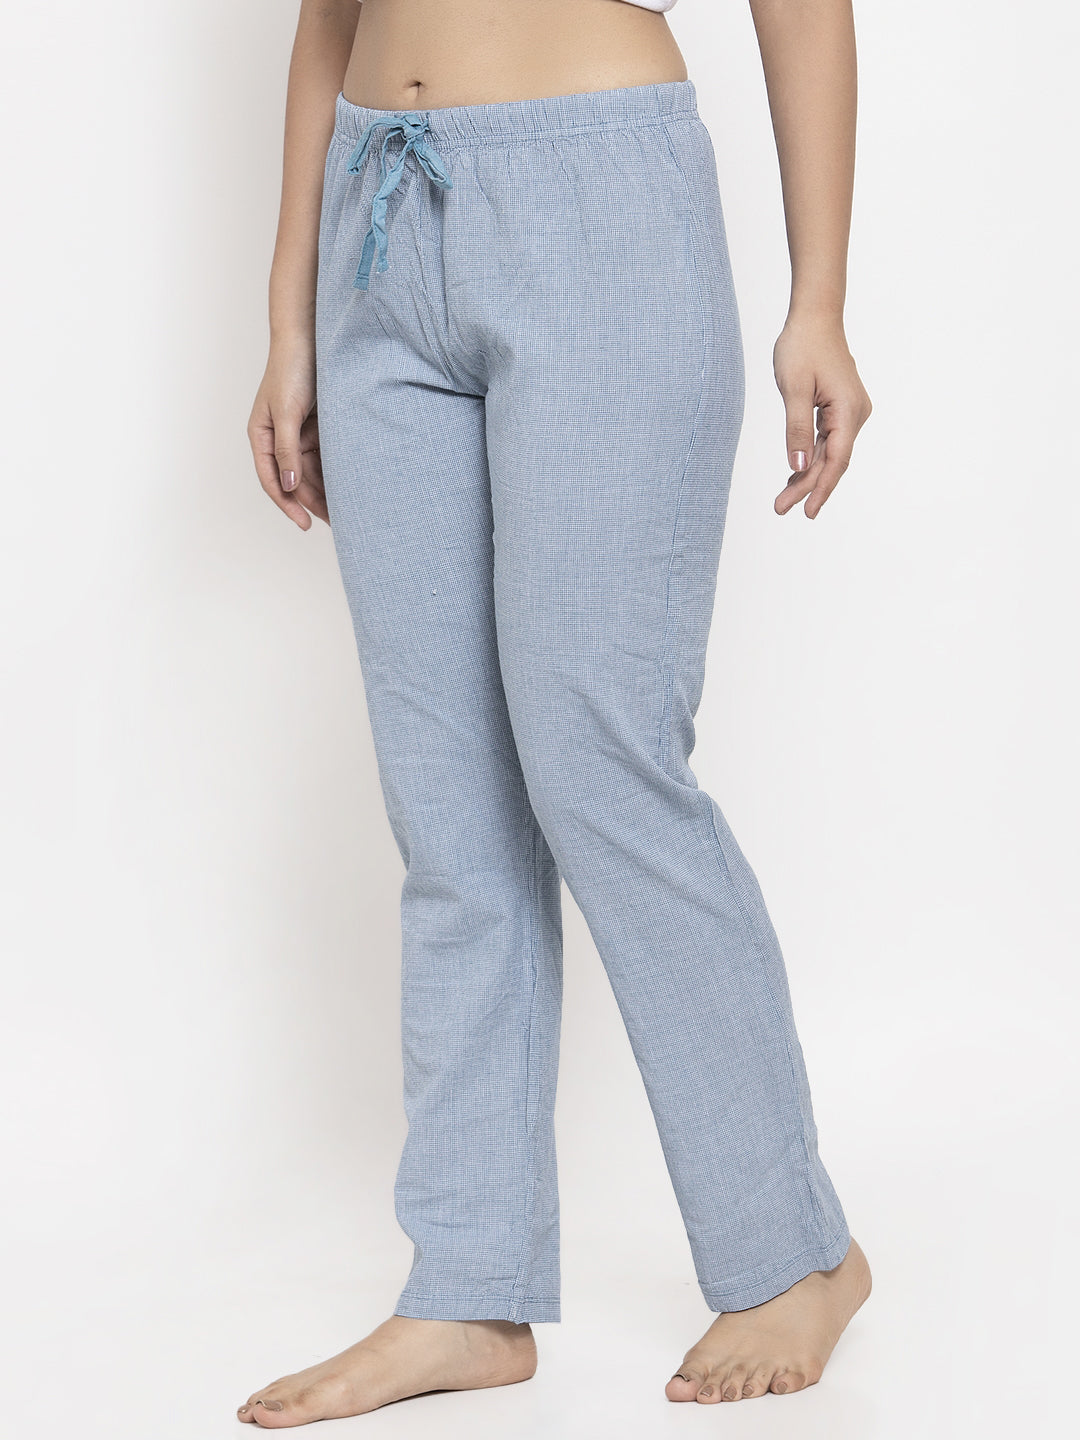 Alfa Women Slim Fit Soft Cotton Lounge Pant / Pajama / Lower / Track Pant  Comfort Night Wear Loungewear